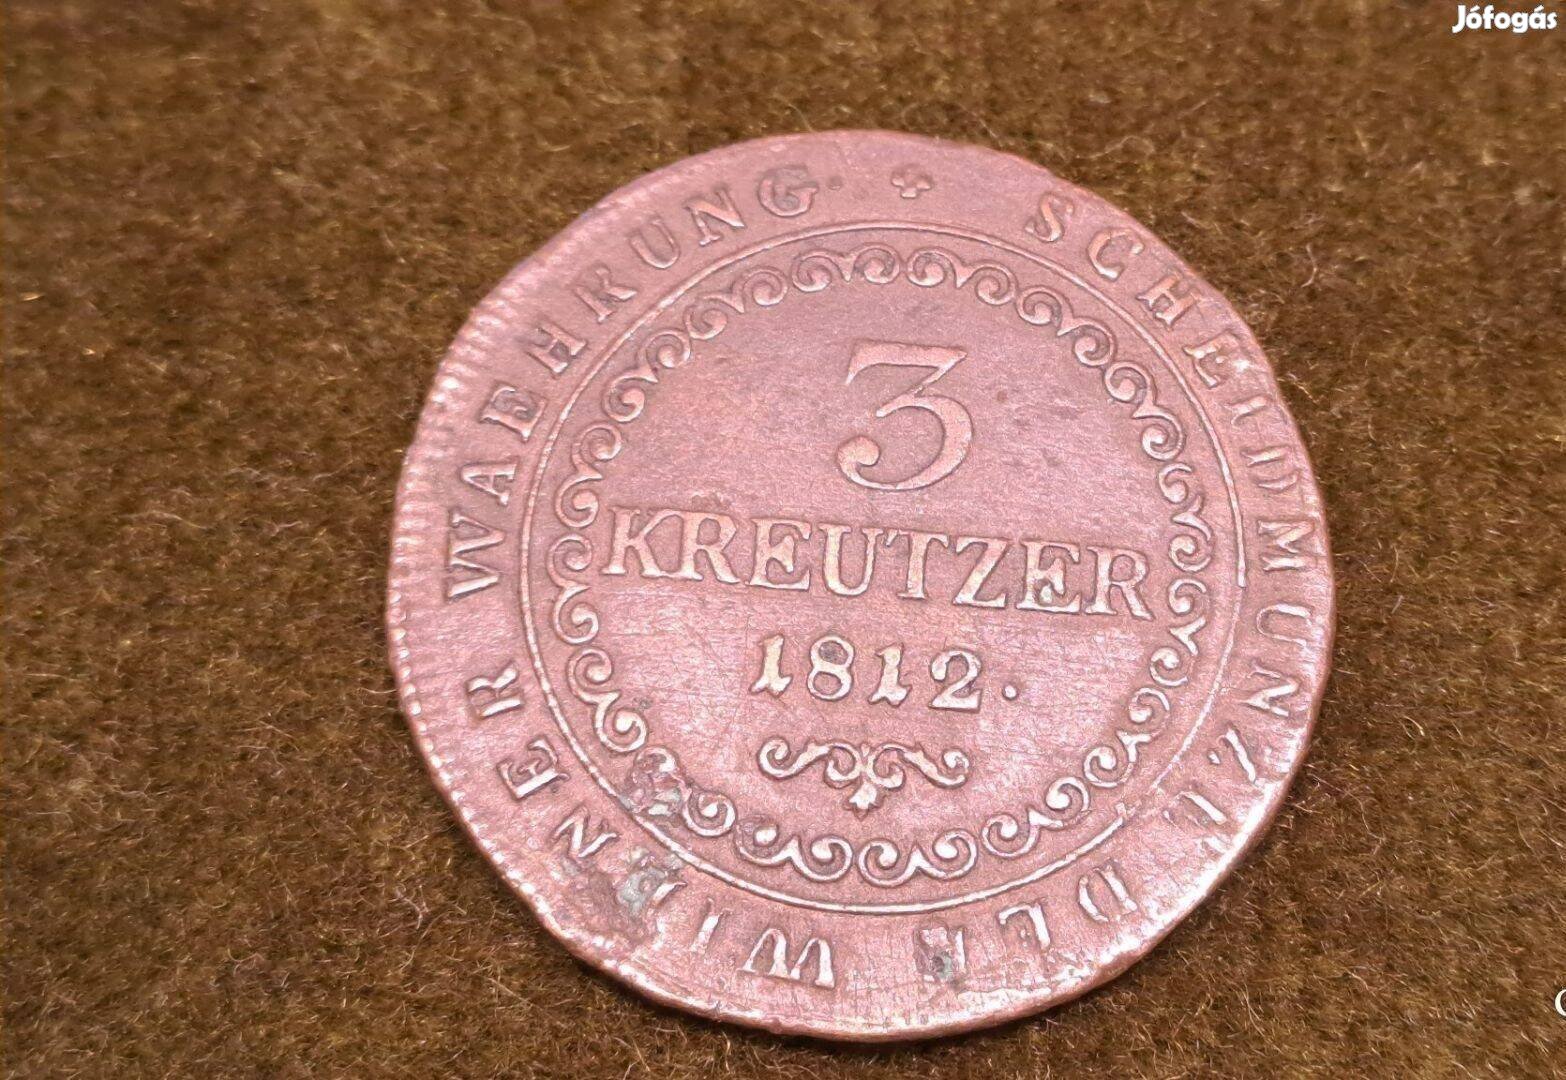 3 Kreutzer 1812